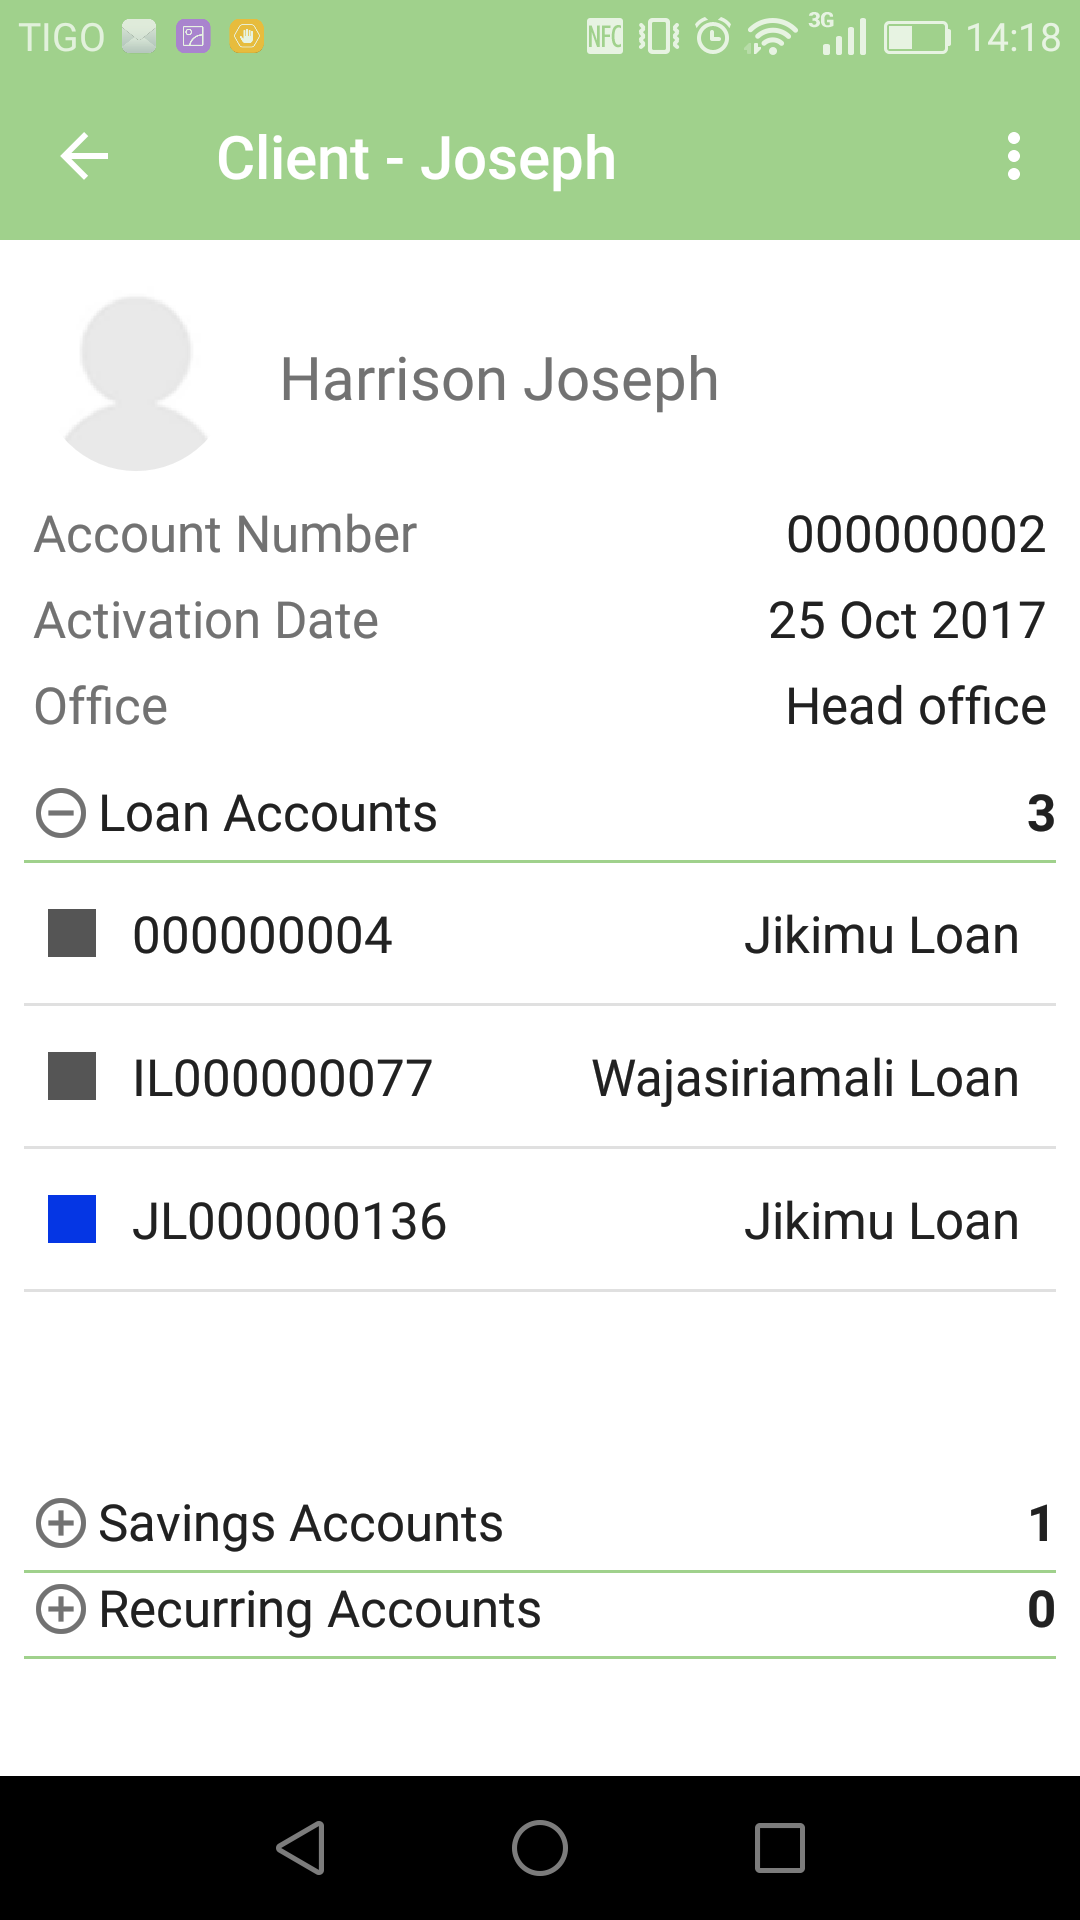 List of Loan Accounts